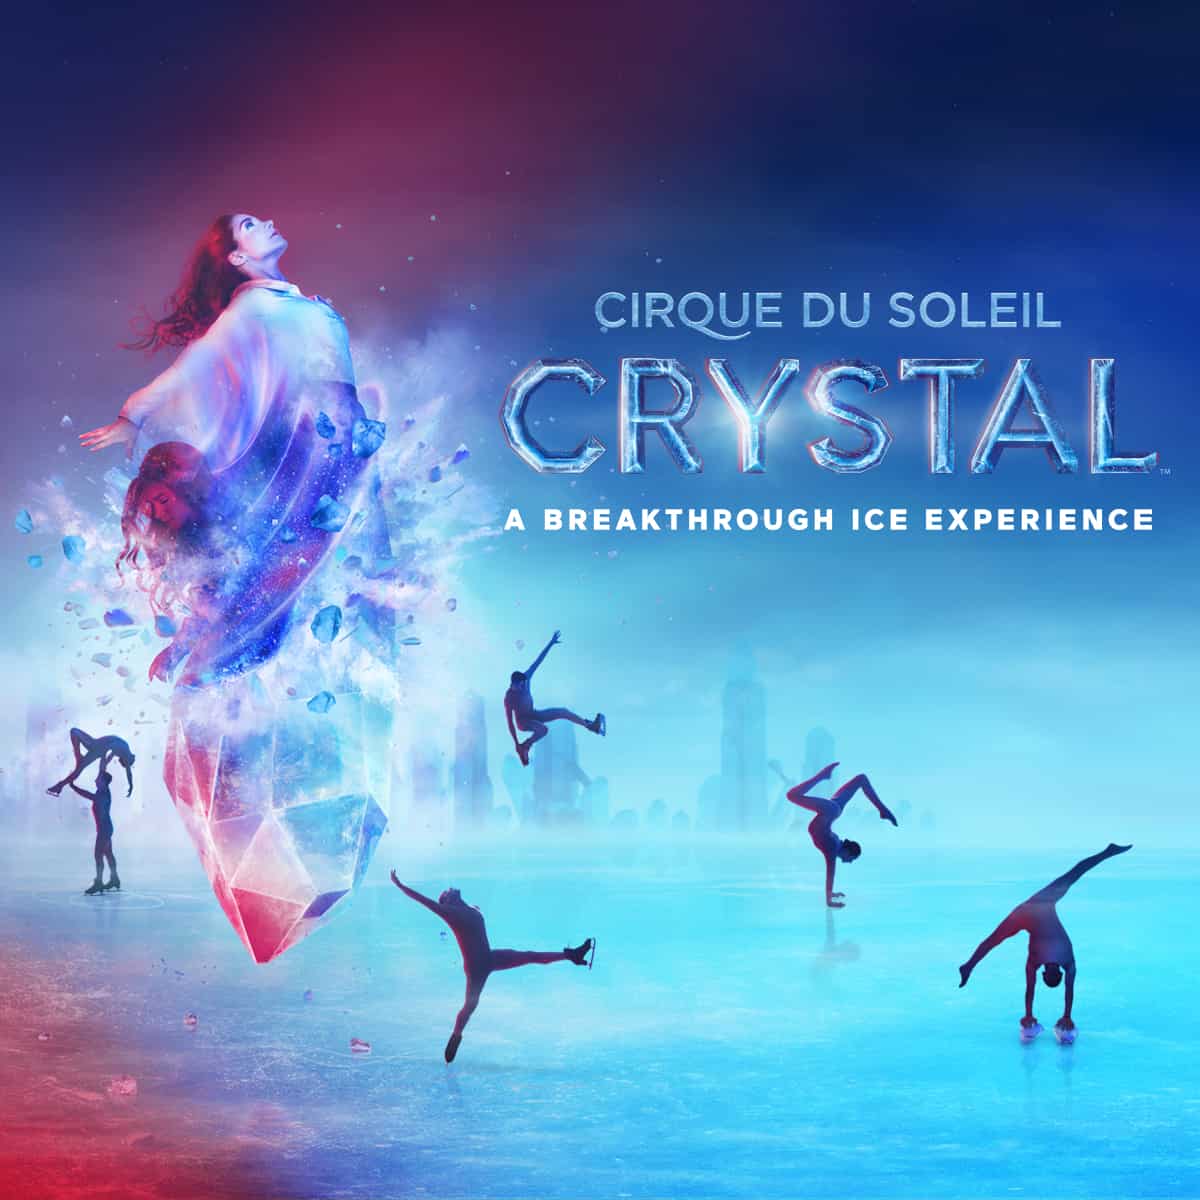 Cirque du Soleil's new ice show 'Crystal' begins touring October, lands